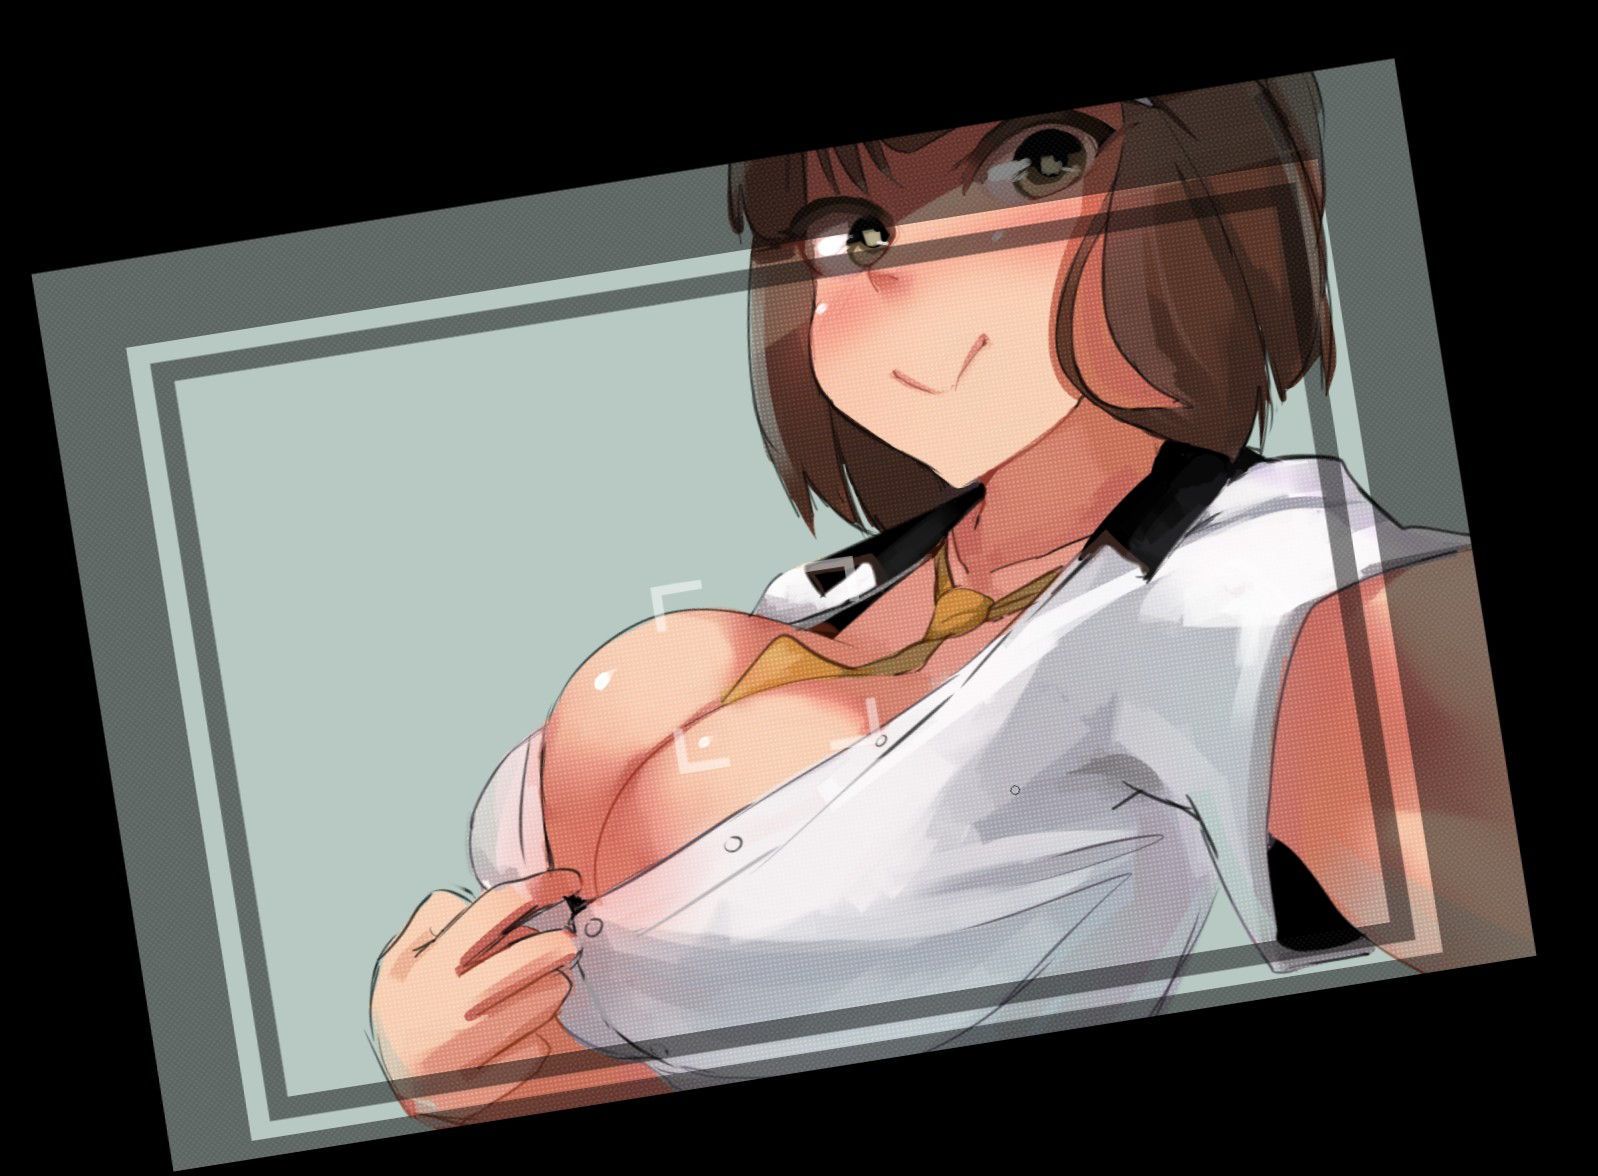 Erotic anime summary beautiful girls taking selfies of their bodies [secondary erotic] 20